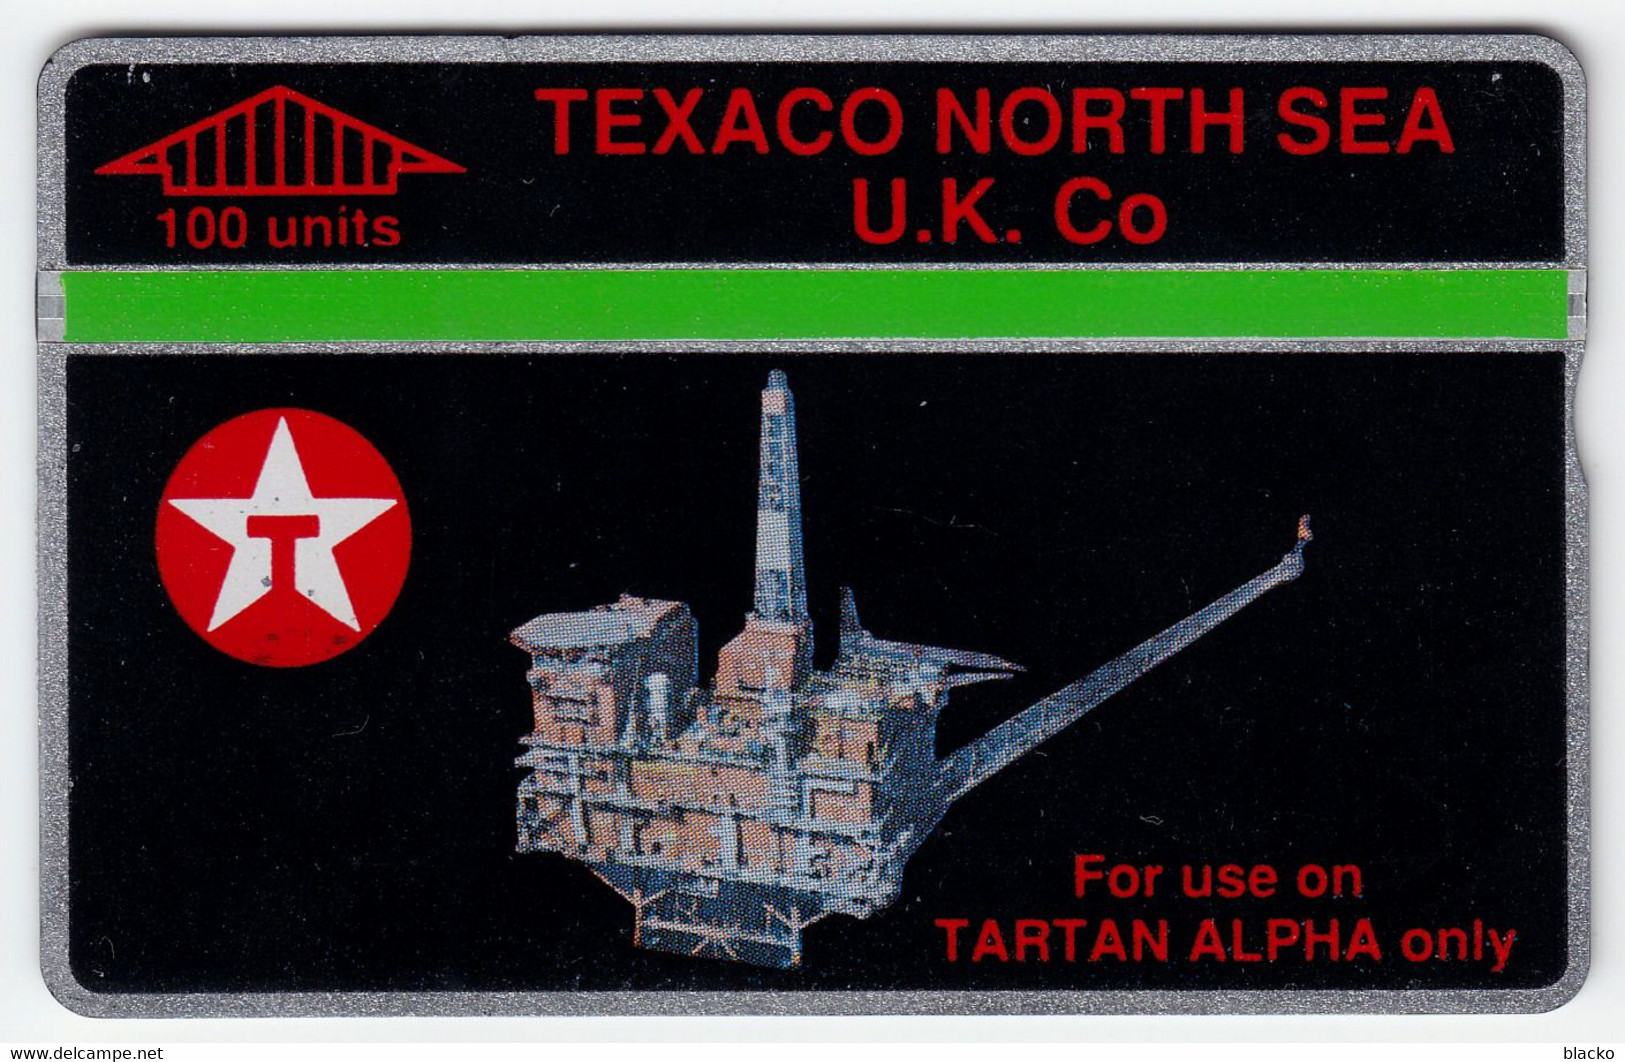 United Kingdom - Oilrig - 1996 068E Texaco North Sea UK Co. Black Card - Tartan Alpha - 17968ex Dbz04 - Plateformes Pétrolières